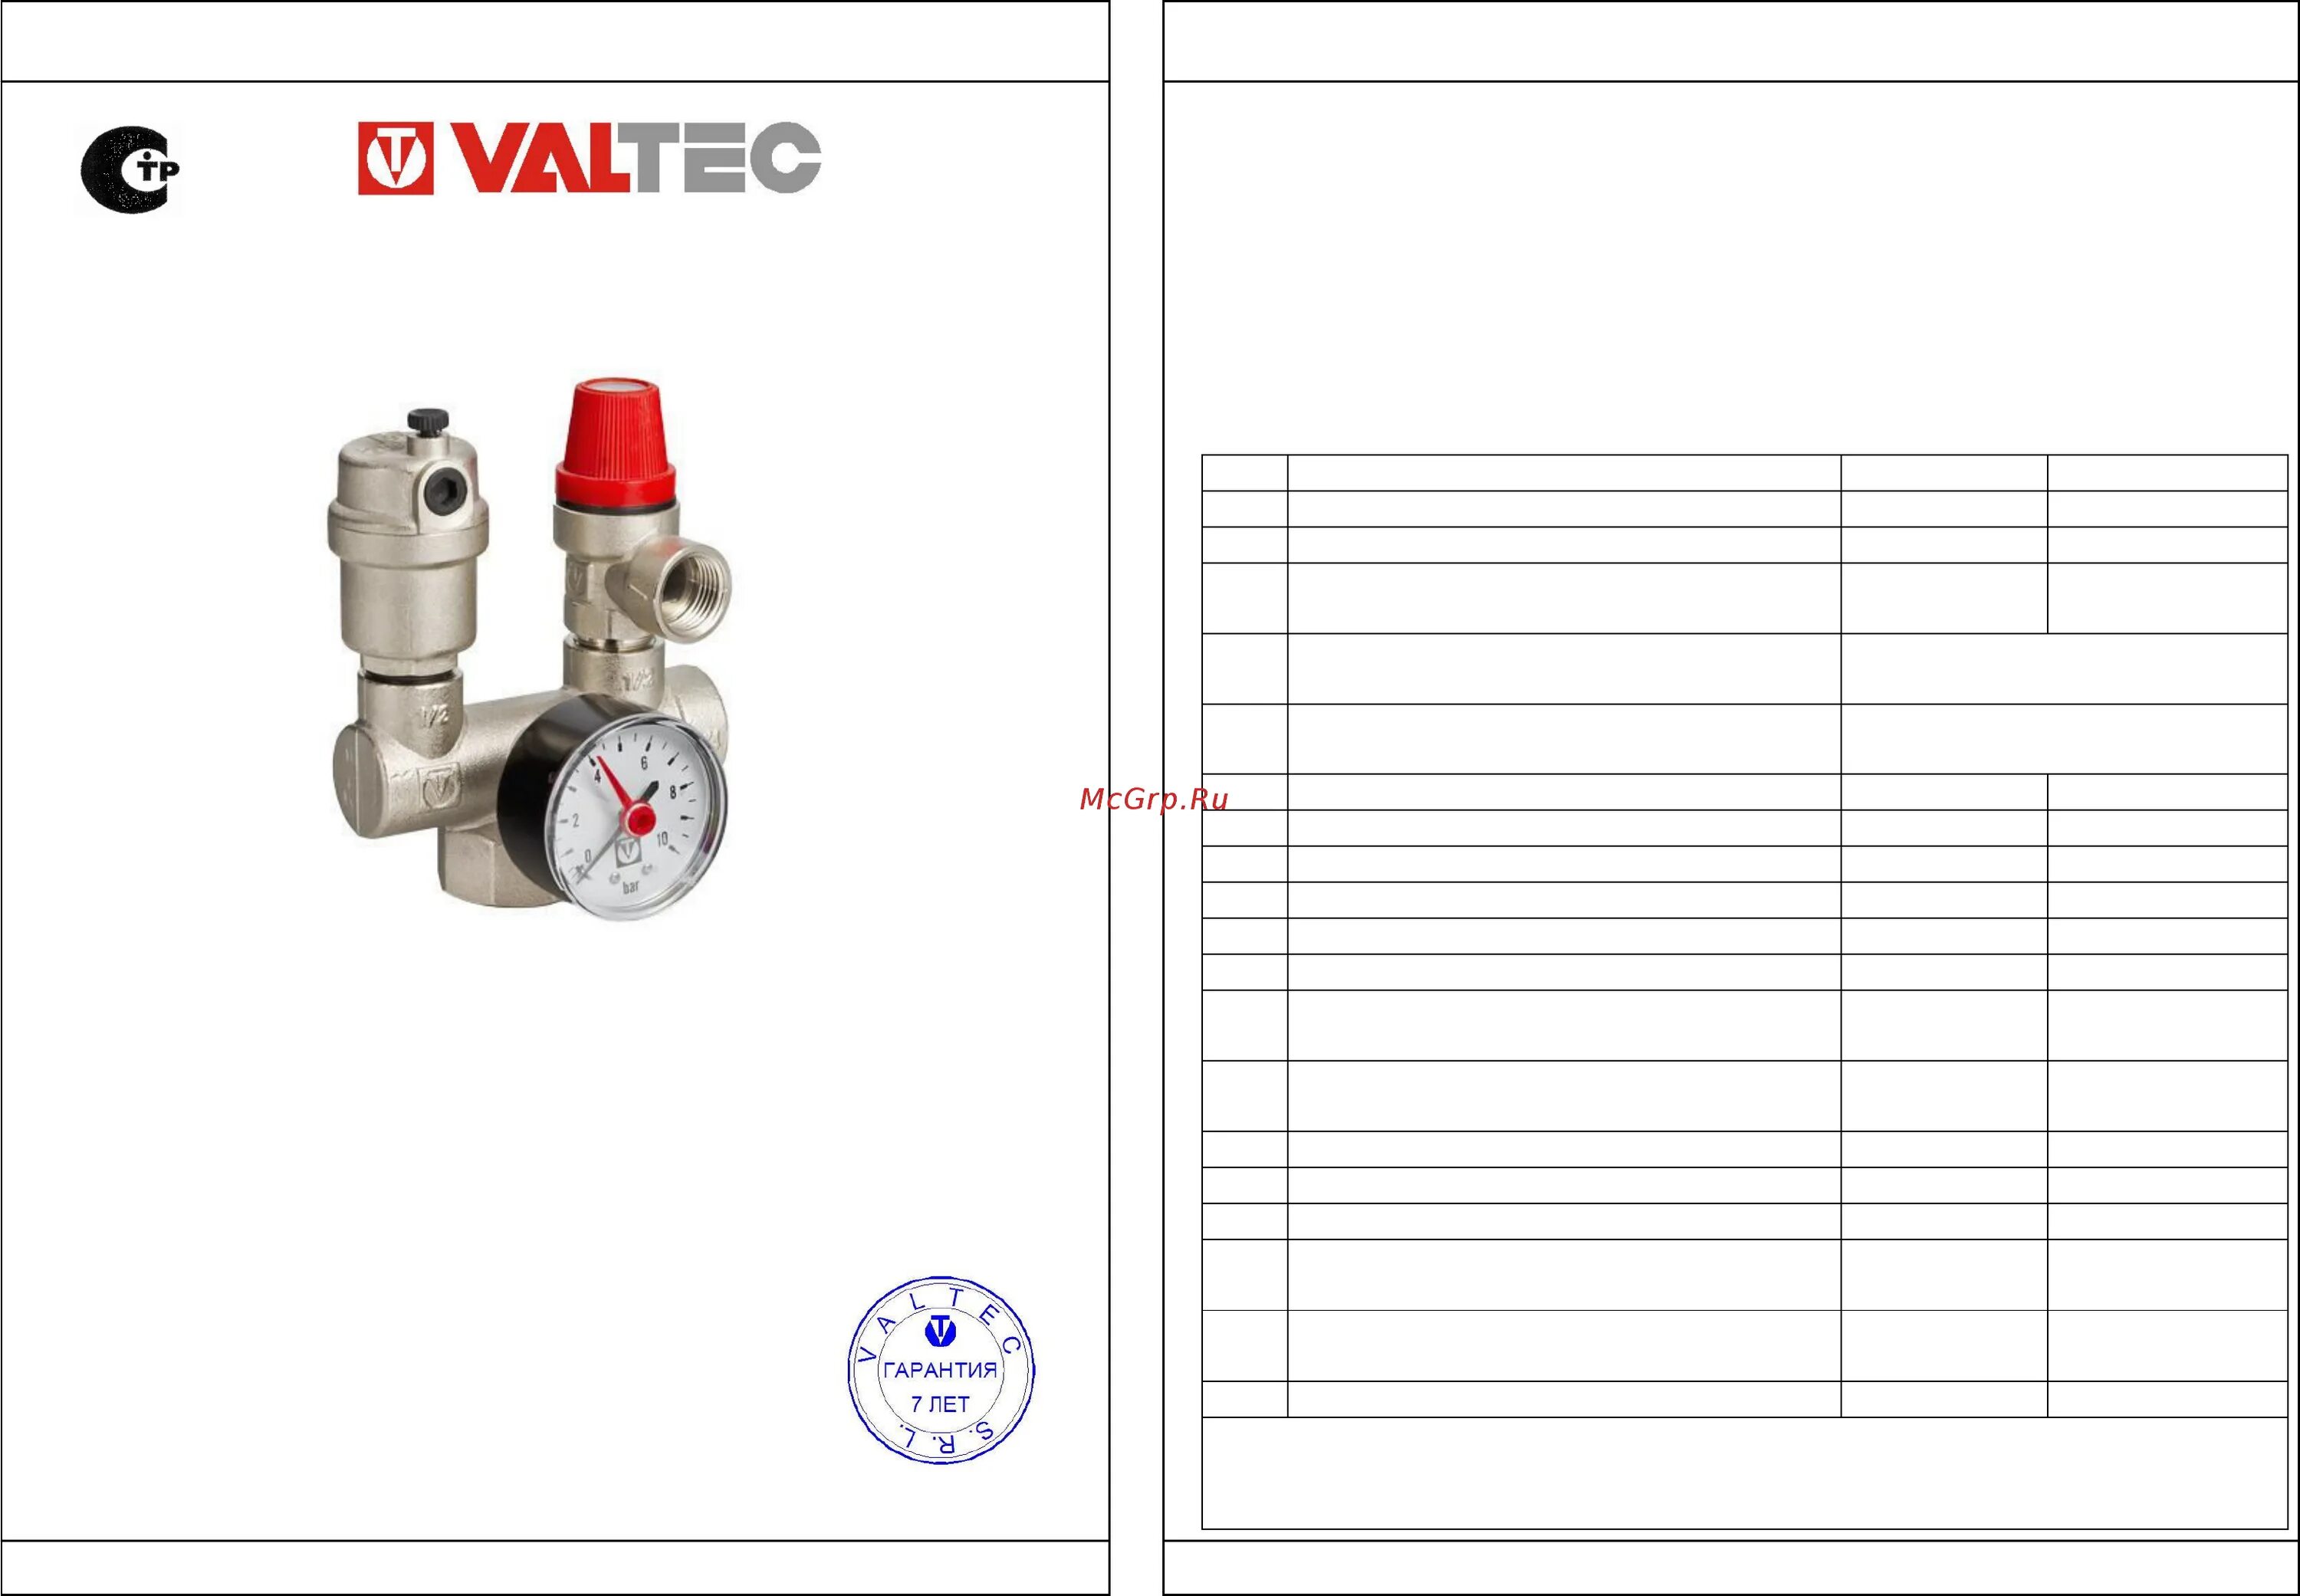 Валтек.VT.460. Группа безопасности VT.460.0.0. Valtec упаковка группа безопасности VT.460. Группа безопасности котла 1" (VT.460.0.0).